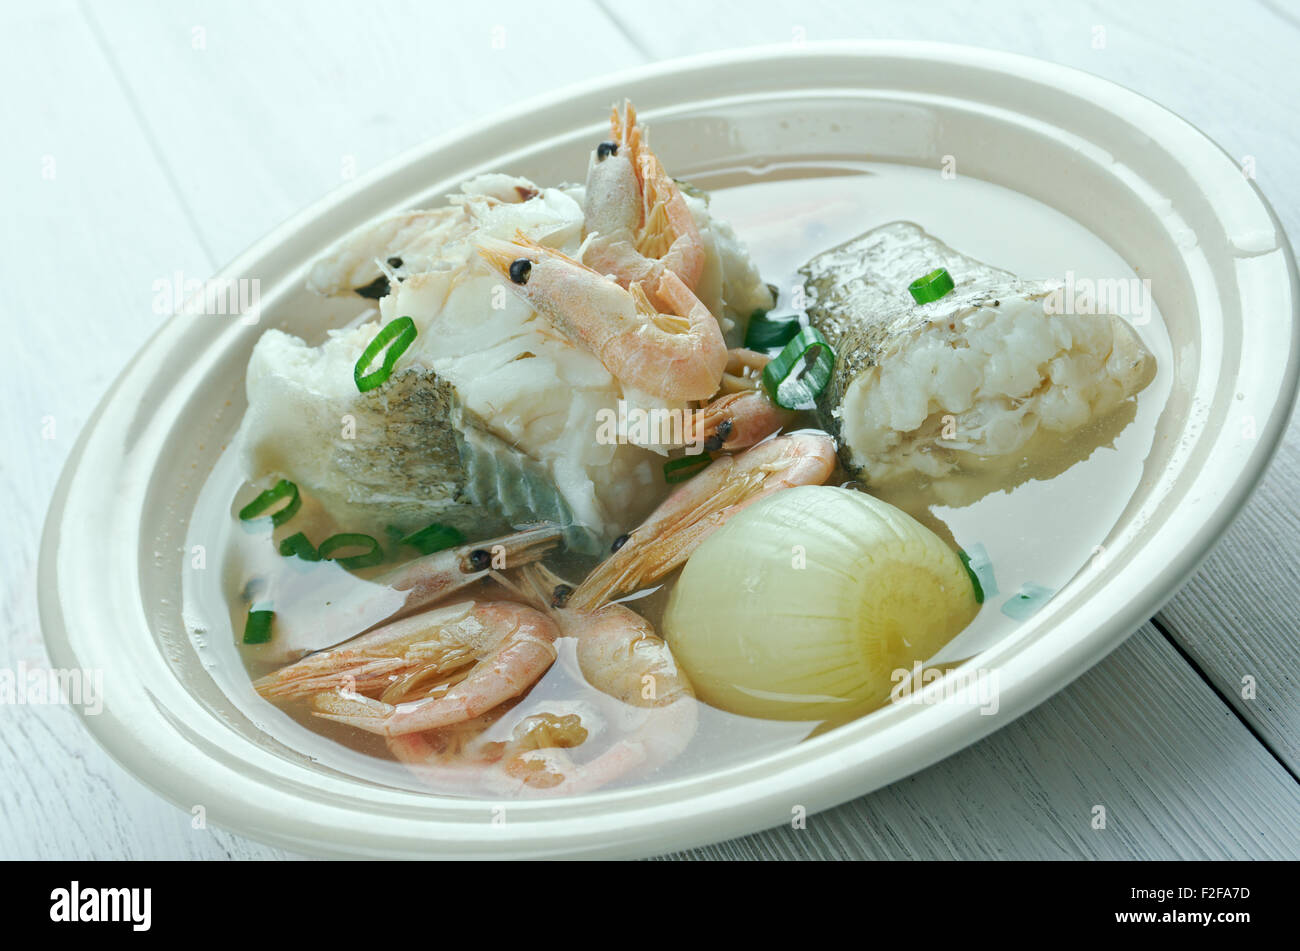 Caldo de siete mares - Mexican version of fish stew Stock Photo